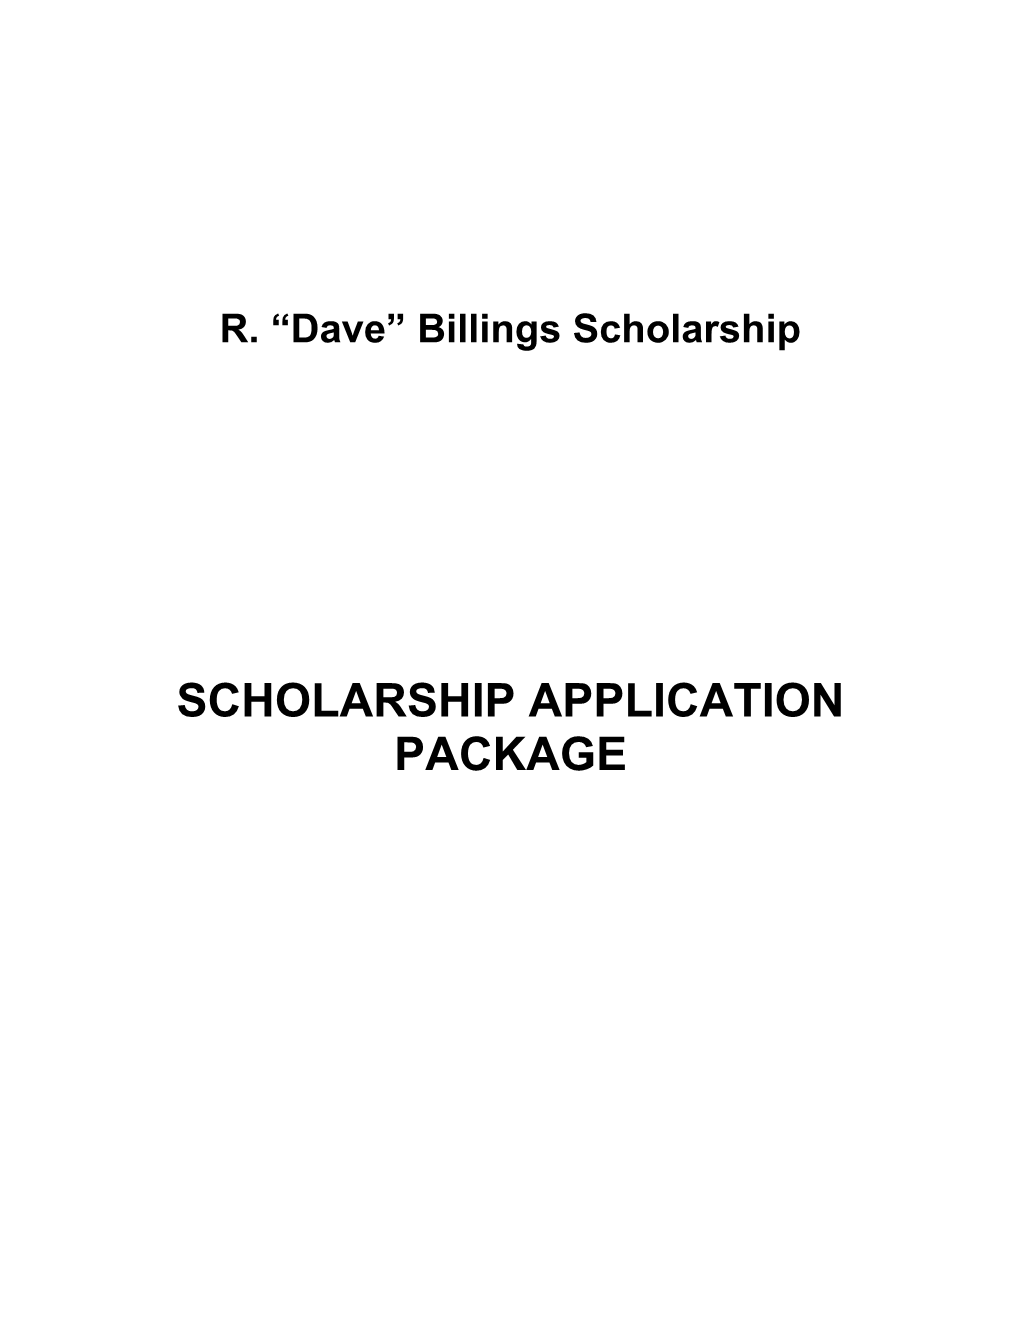 R. Dave Billings Scholarship